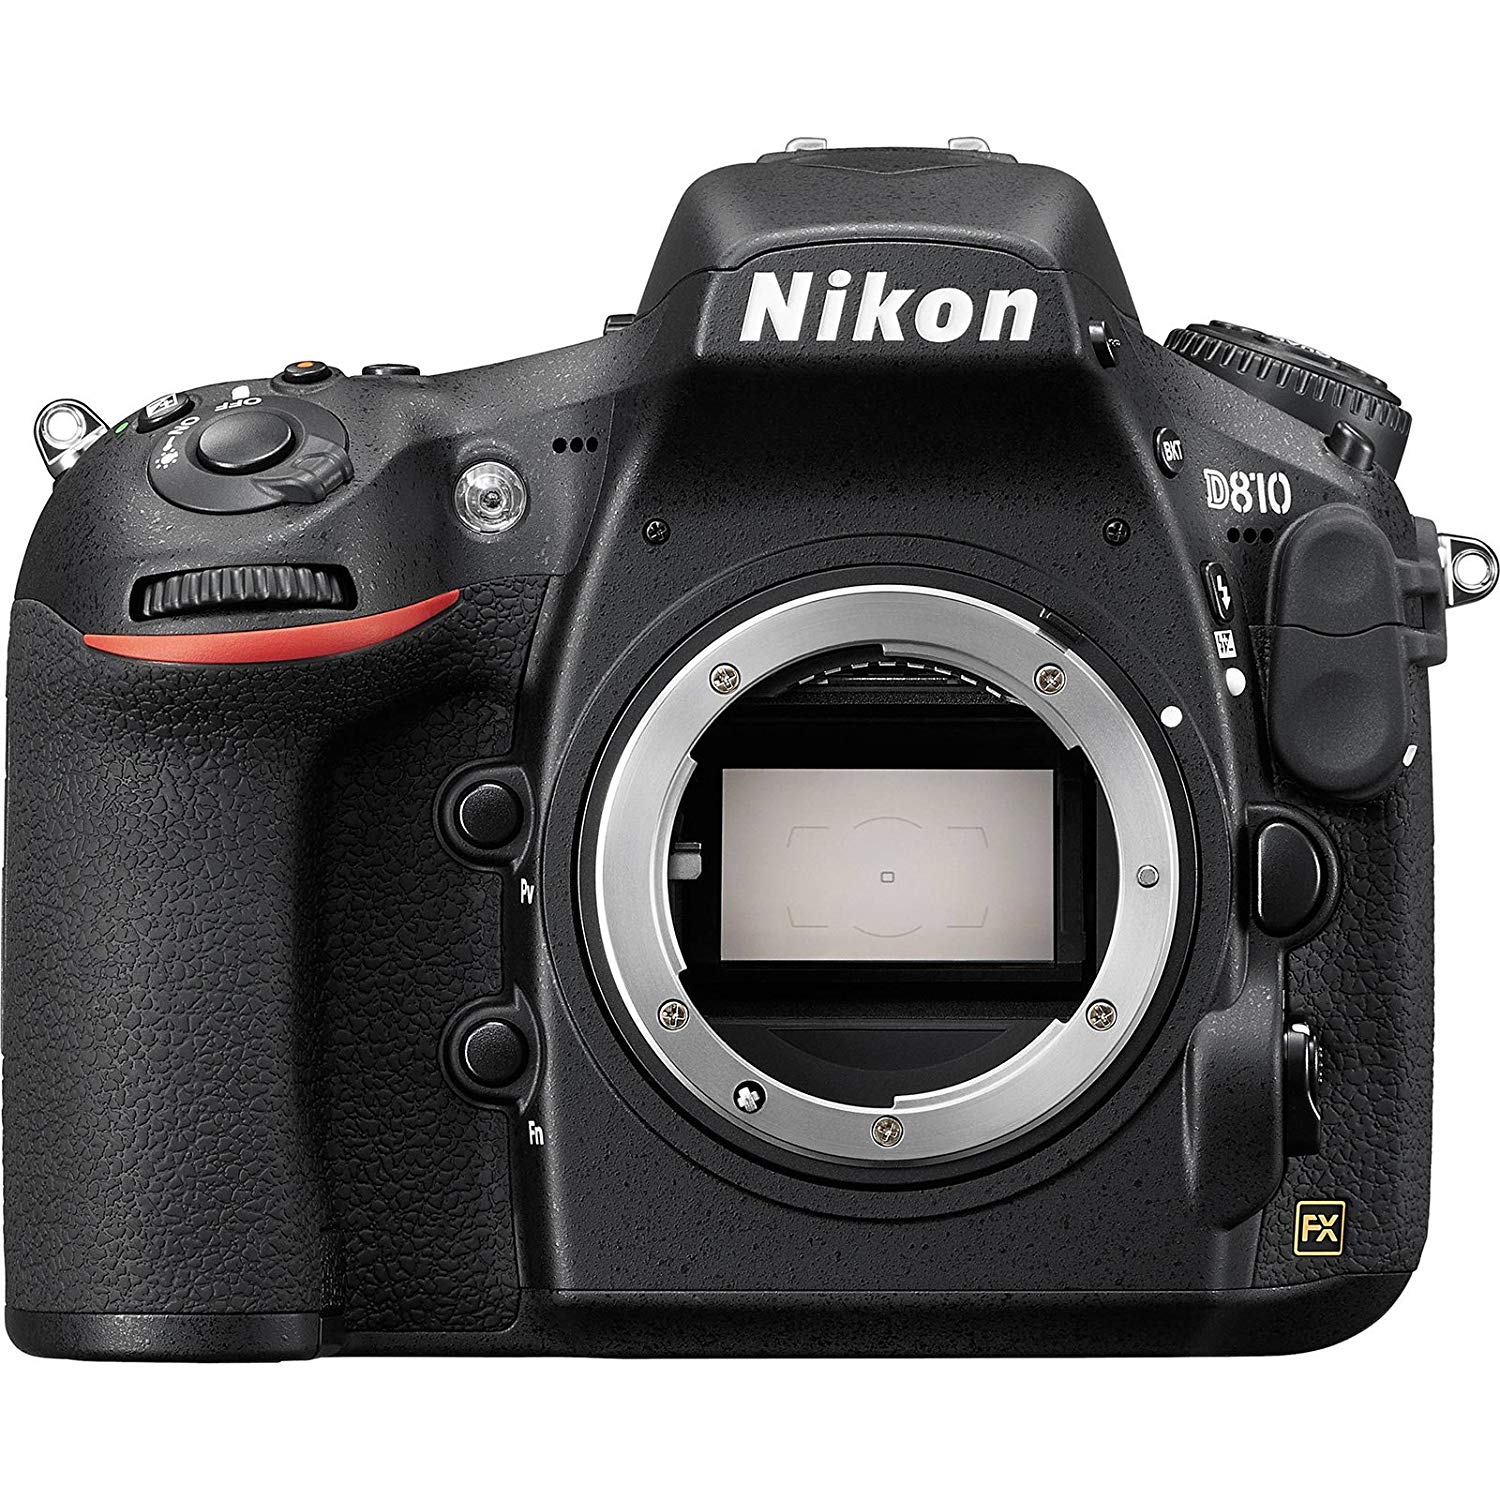 Nikon Корпус цифровой SLR камеры D810 (после ремонта)...